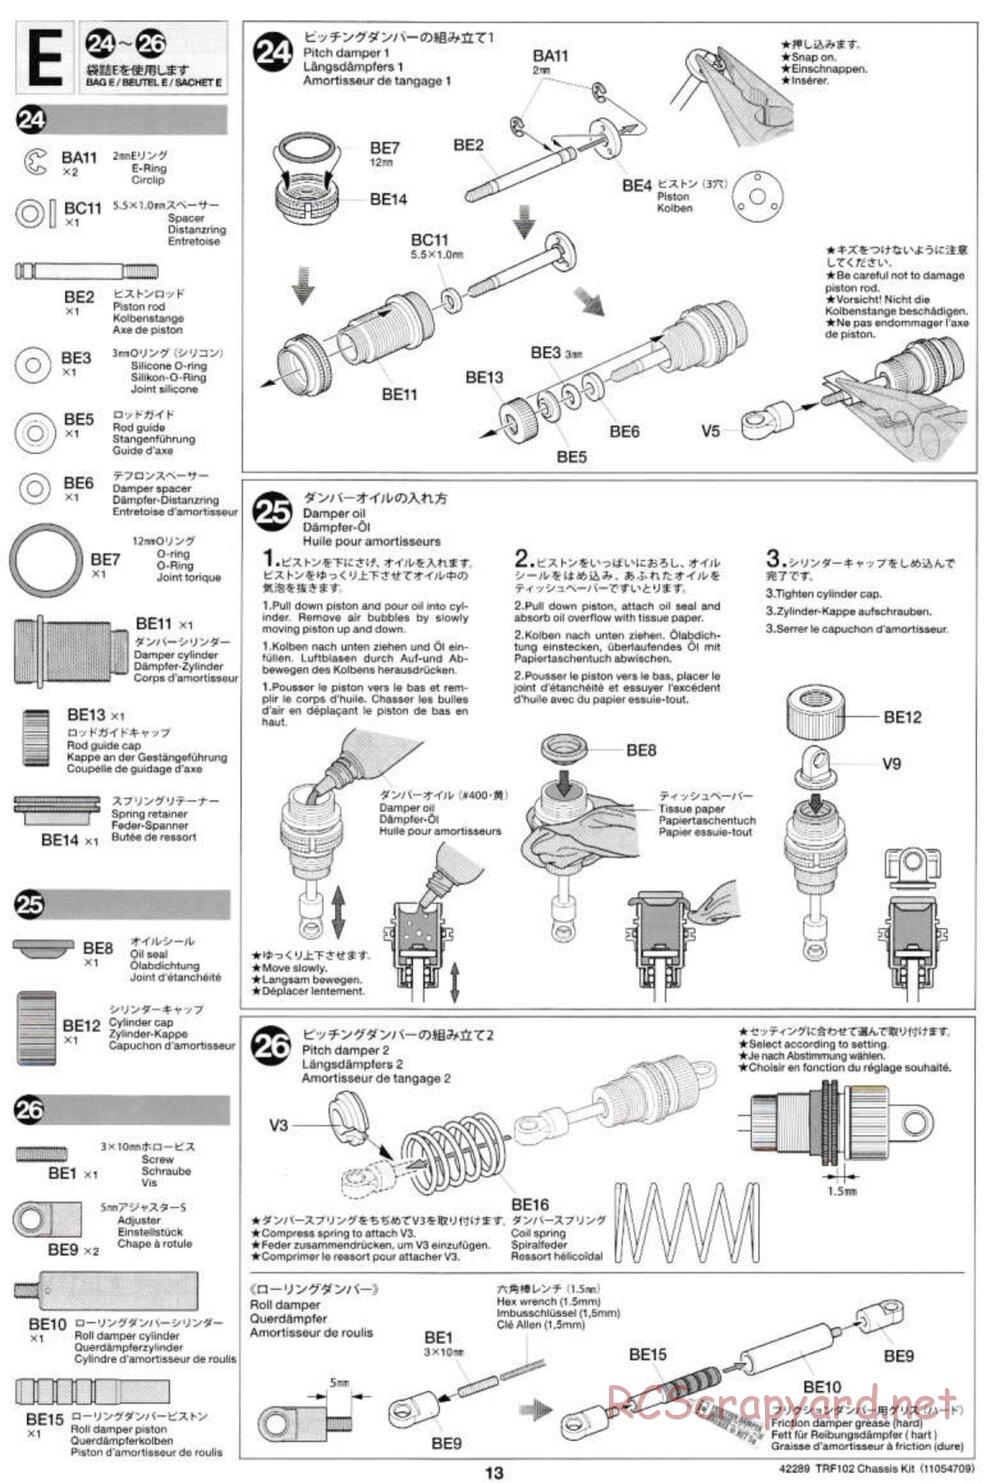 Tamiya - TRF102 Chassis - Manual - Page 13